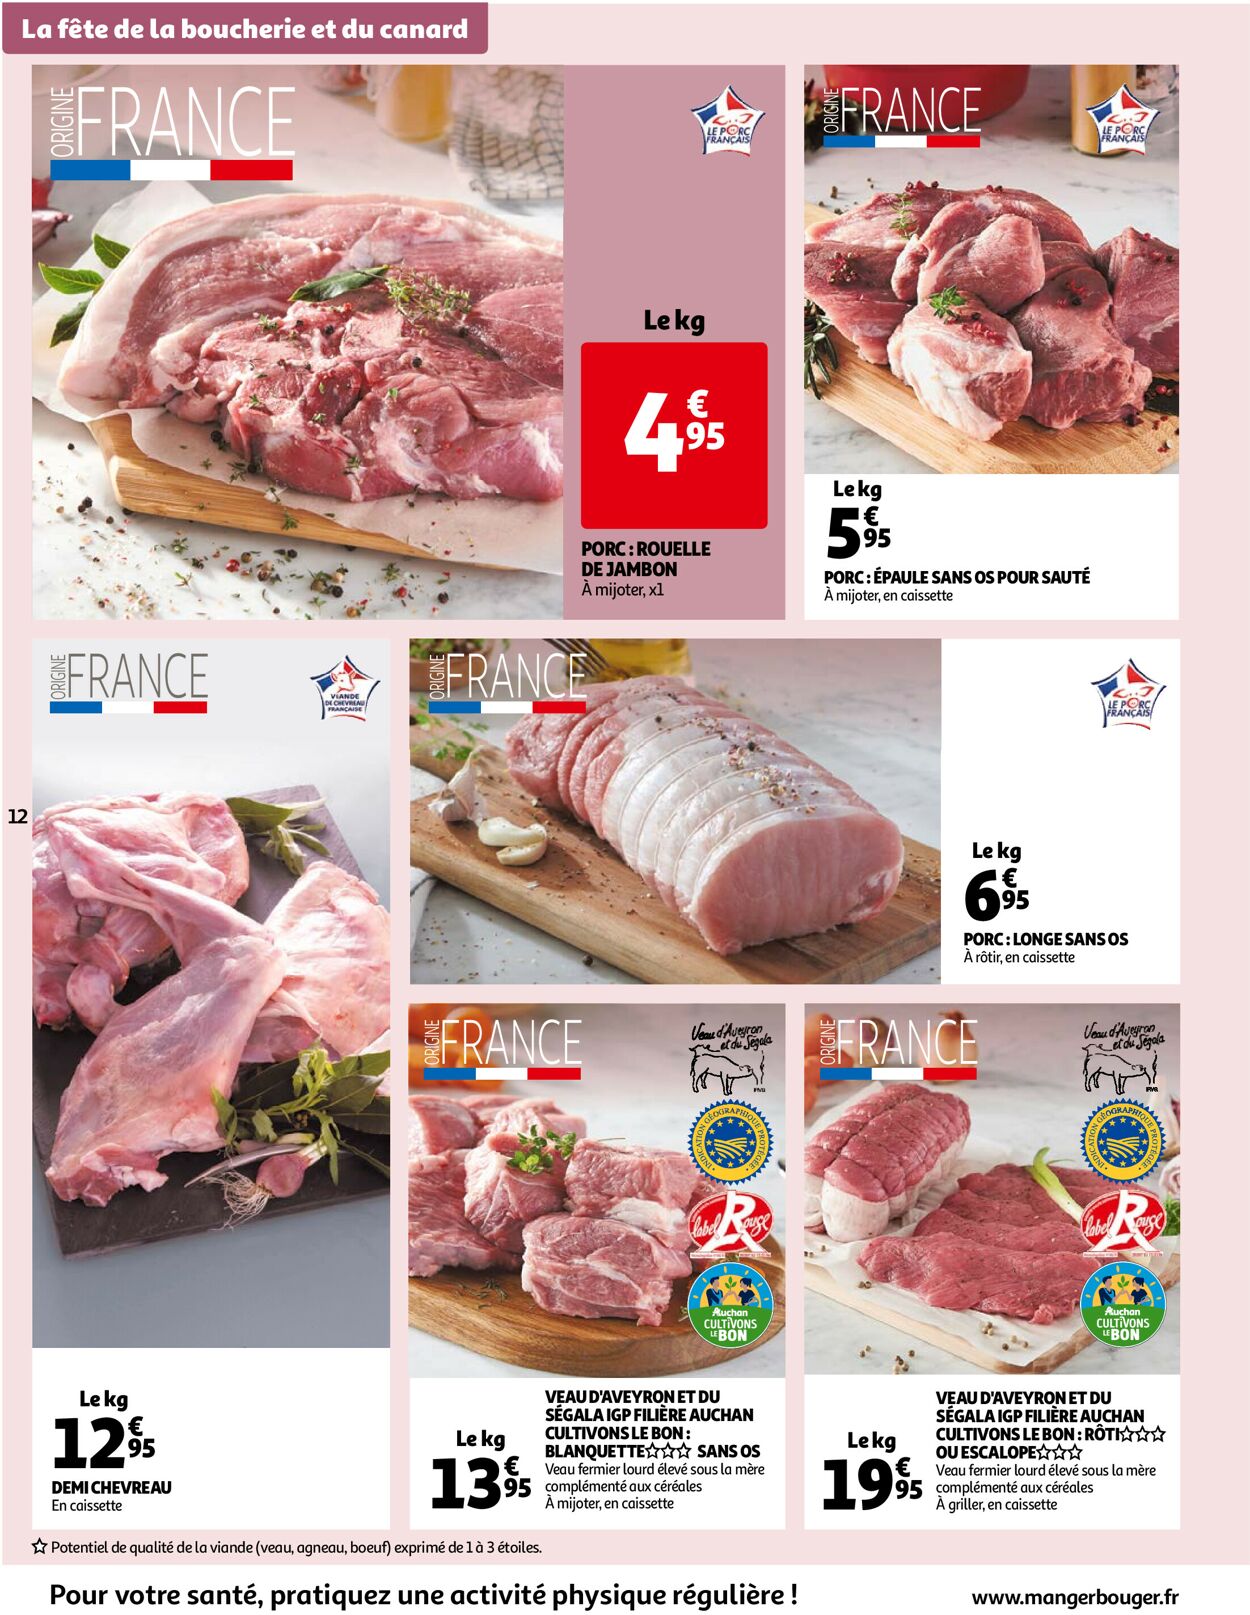 Auchan Catalogue - 09.11-15.11.2022 (Page 12)